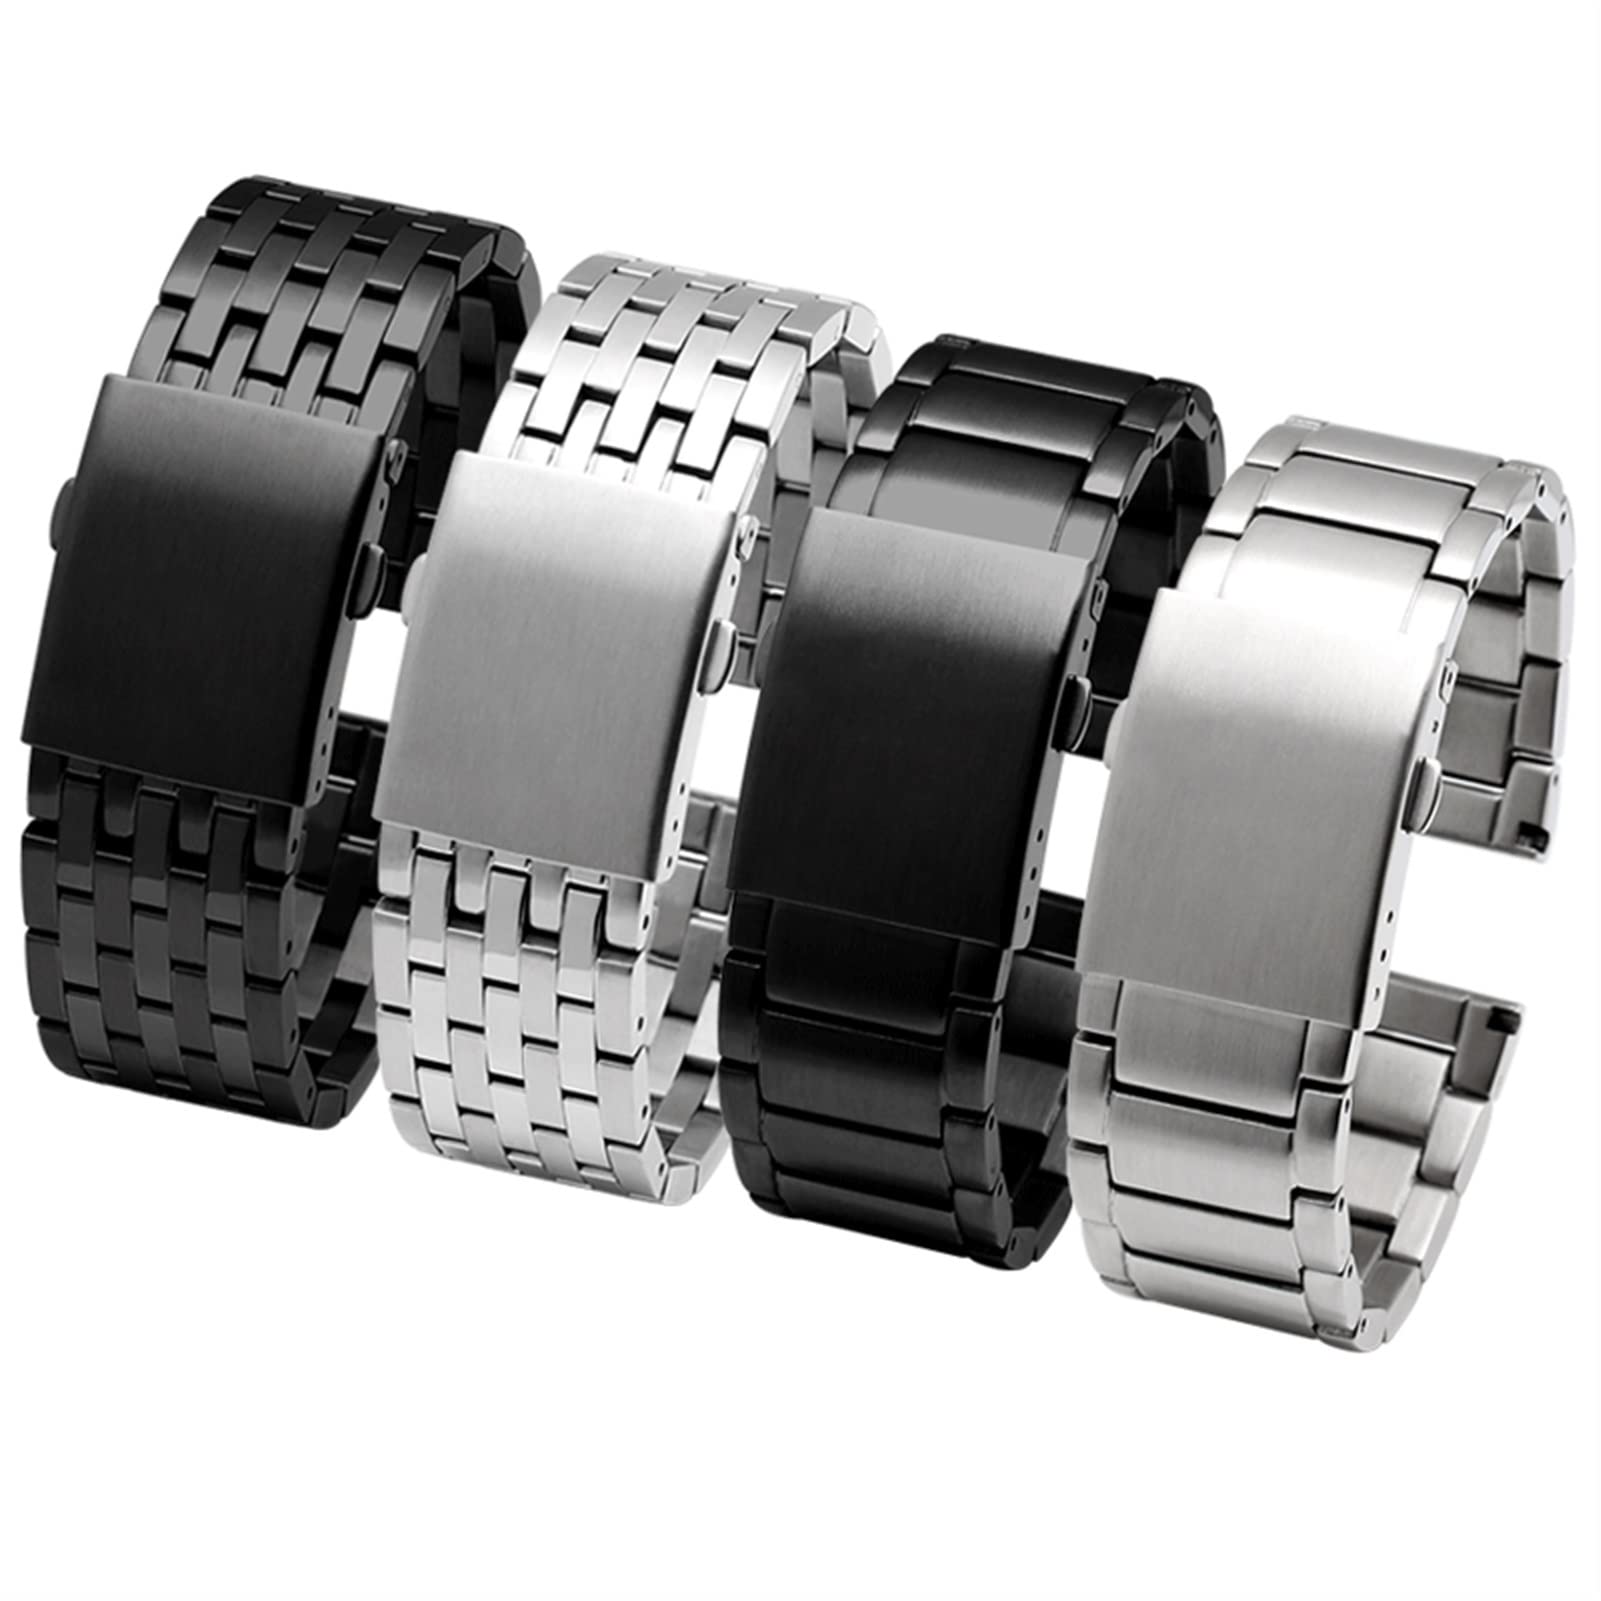 AEMALL Stainless Steel Watch Strap for Diesel DZ4316 DZ7395 7305 4209 4215 Men Metal Solid Wrist Watchband Bracelet 24mm 26mm 28mm 30mm Watchbands (Color : A Black, Size : 30mm)